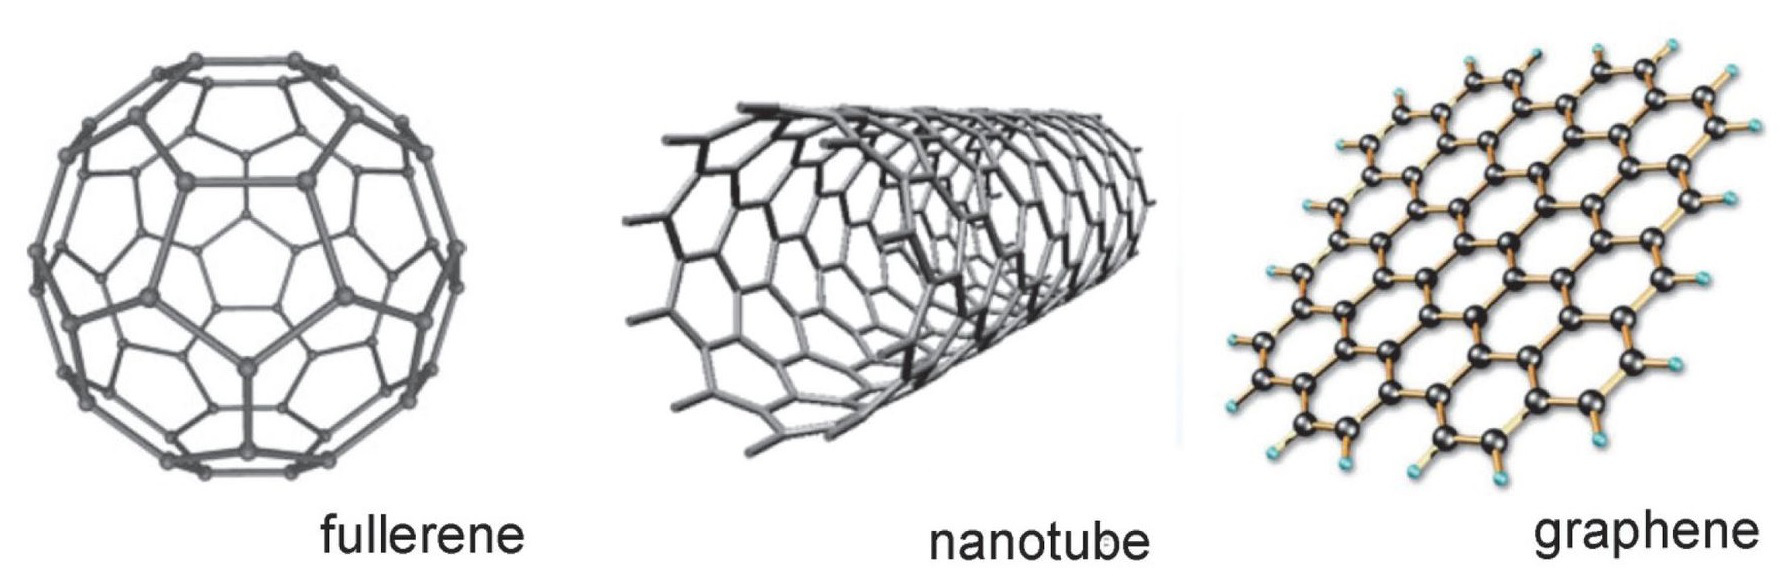 Фуллерен нанотрубки. Графен и фуллерен. Фуллерены нанотрубки Графен. Наноматериалы углеродные нанотрубки фуллерены Графен. Алмаз графит Графен фуллерен.